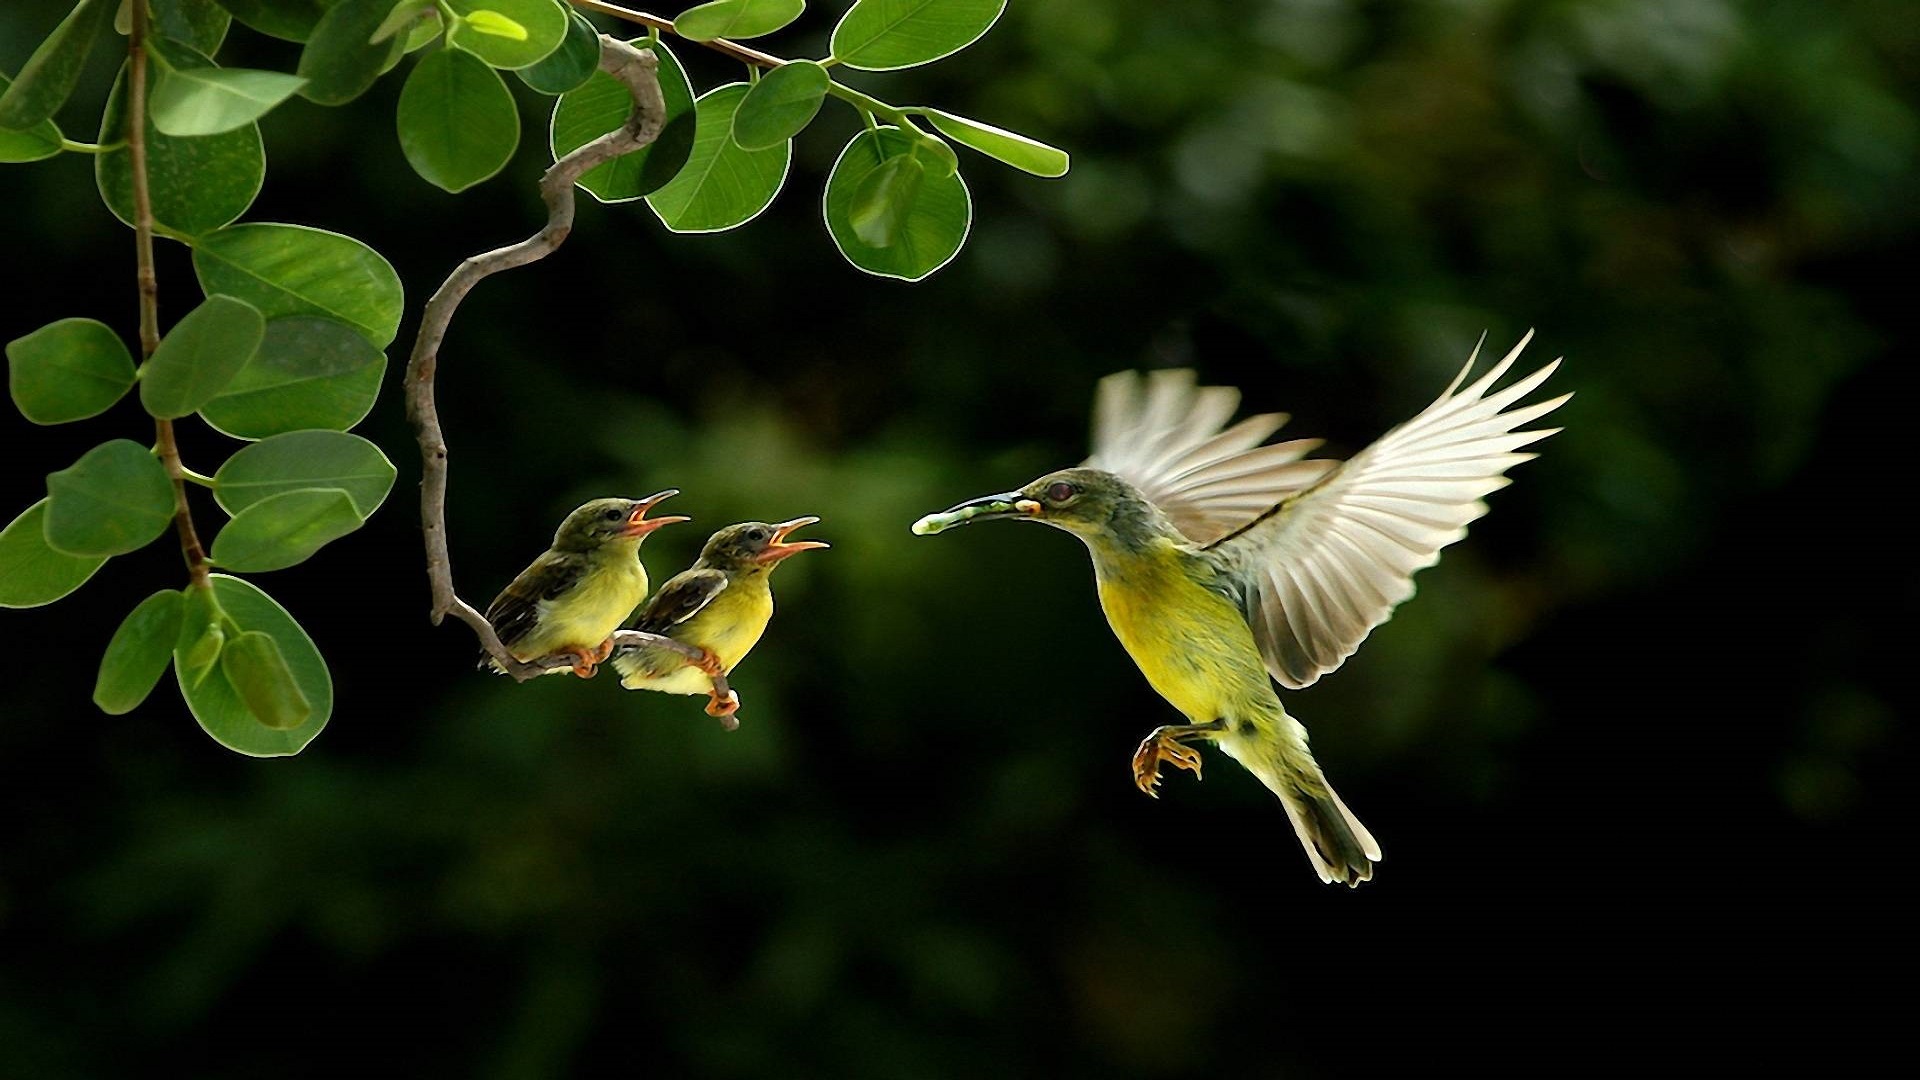 Love Birds Wallpapers Hd Free Download For Desktop - Wildlife Photography -  1024x640 Wallpaper 